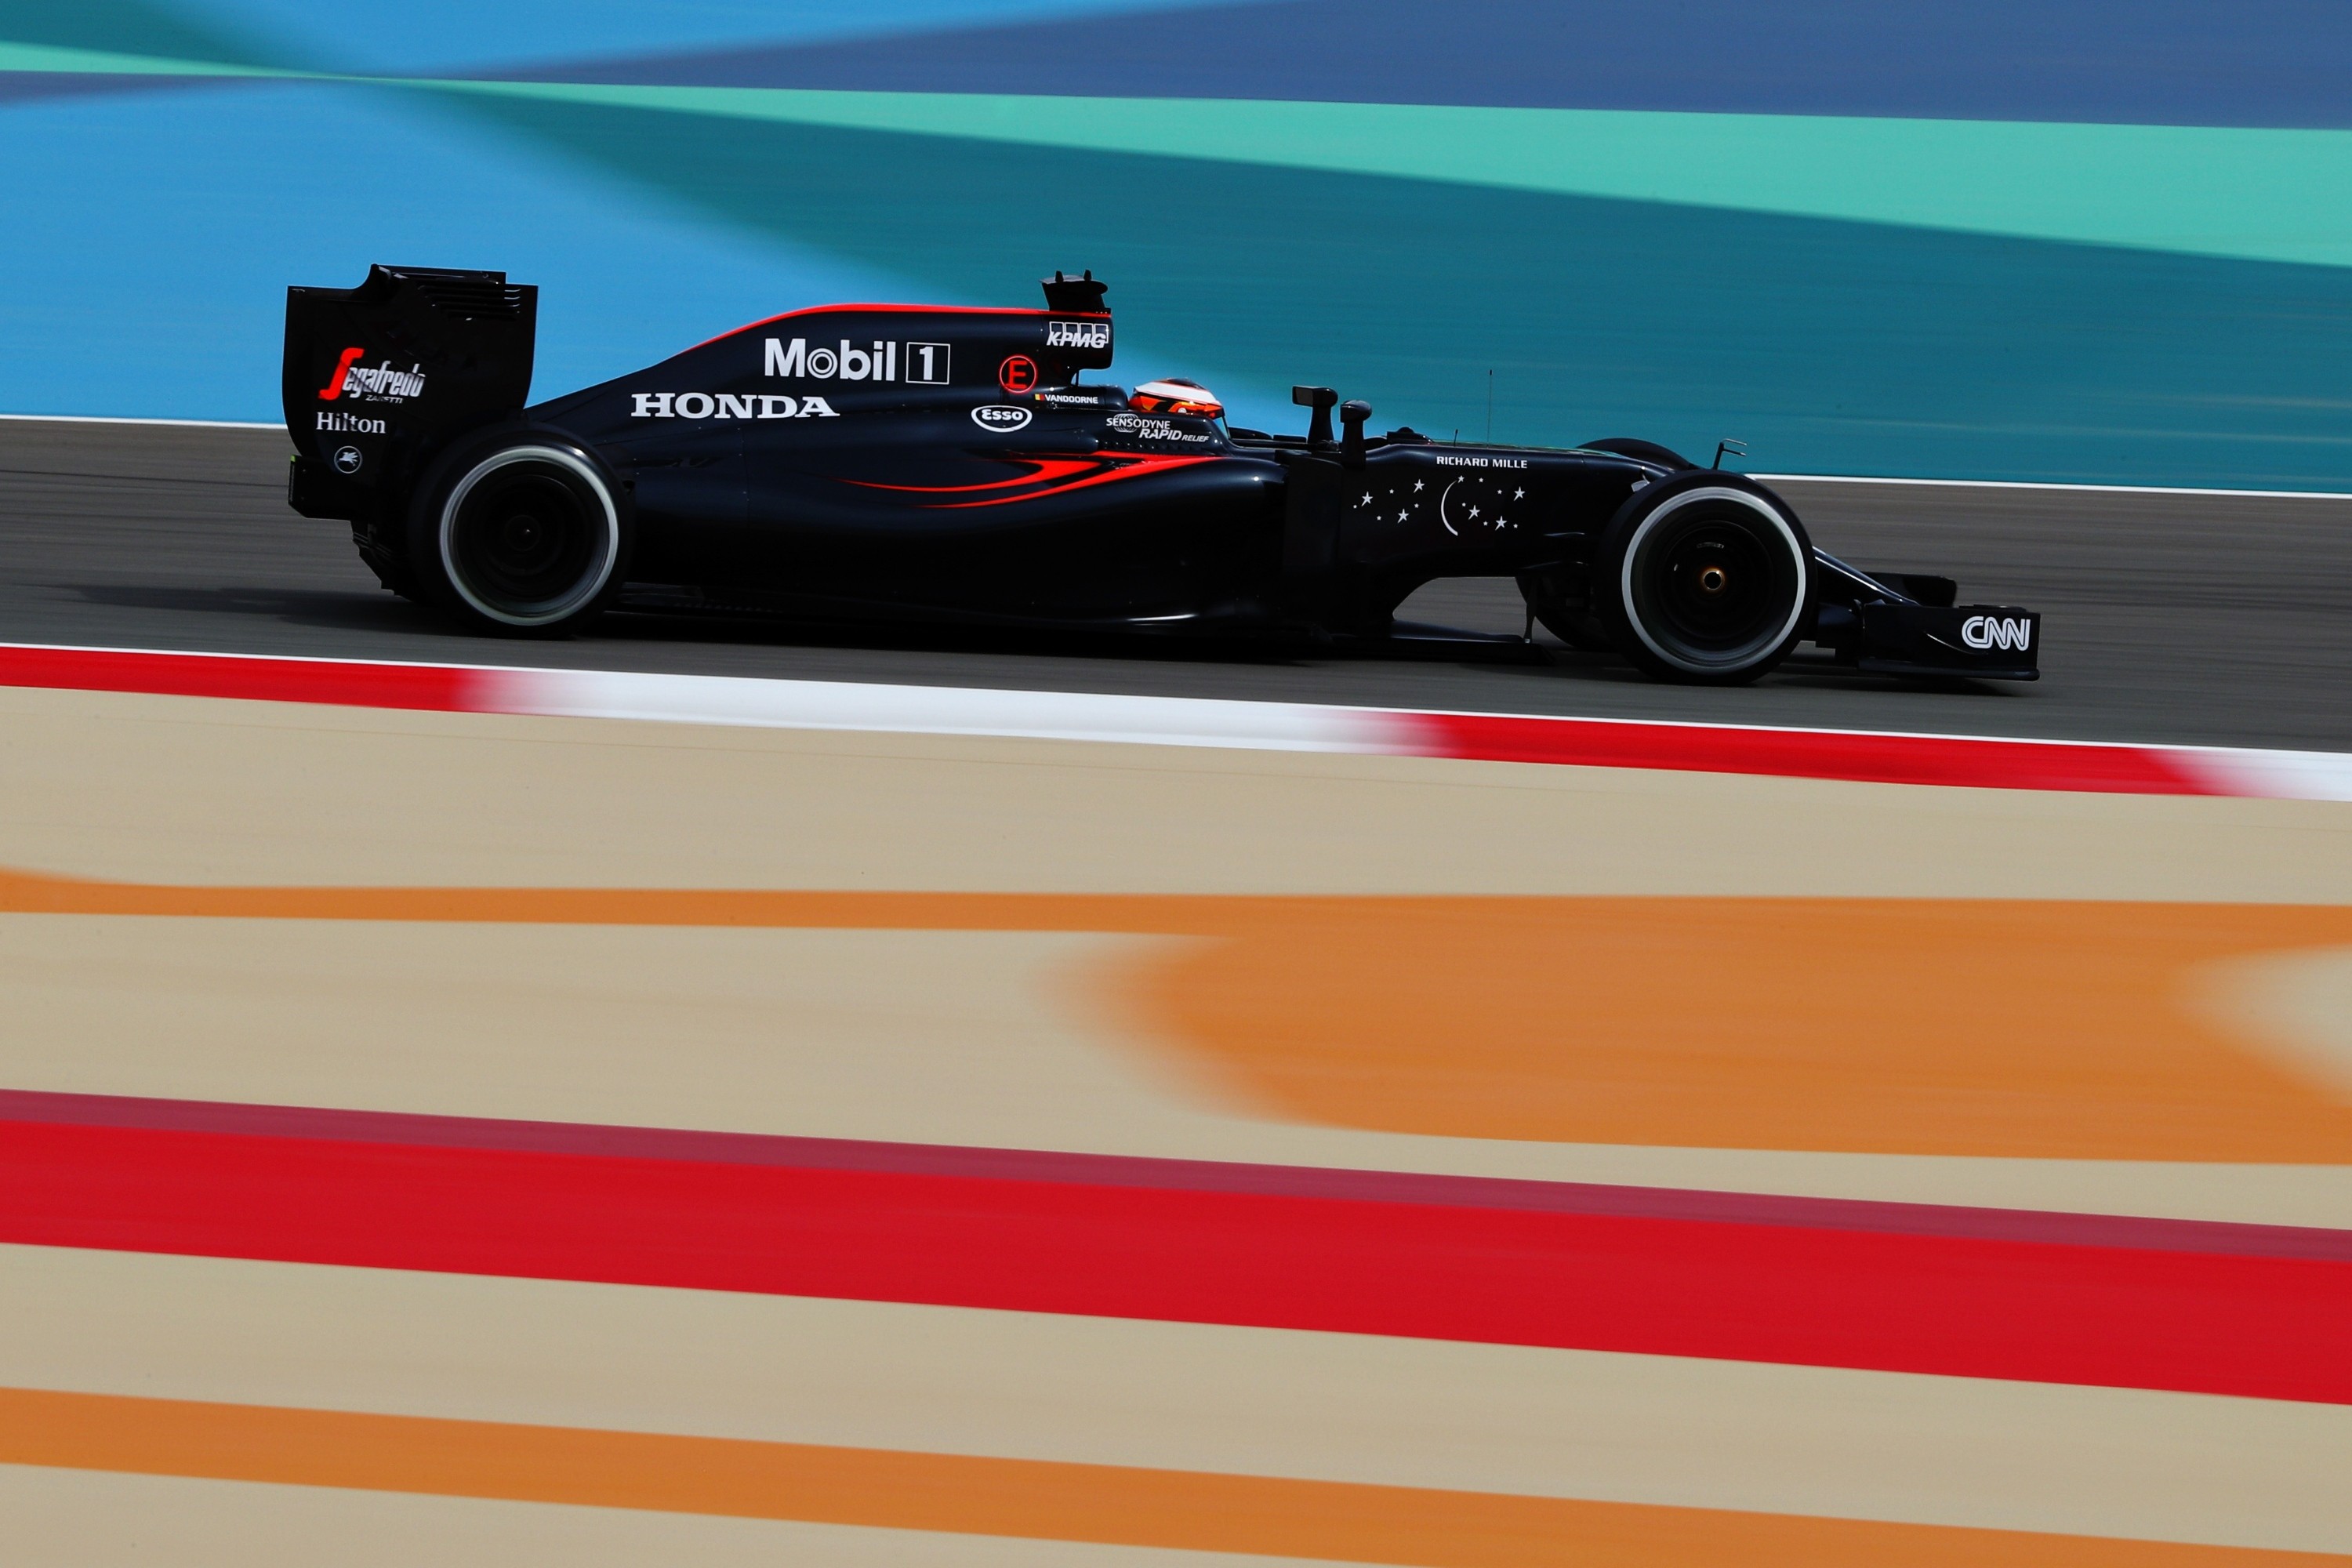 Formula 1 Mclaren F1 Wallpapers Hd Desktop And Mobile Backgrounds